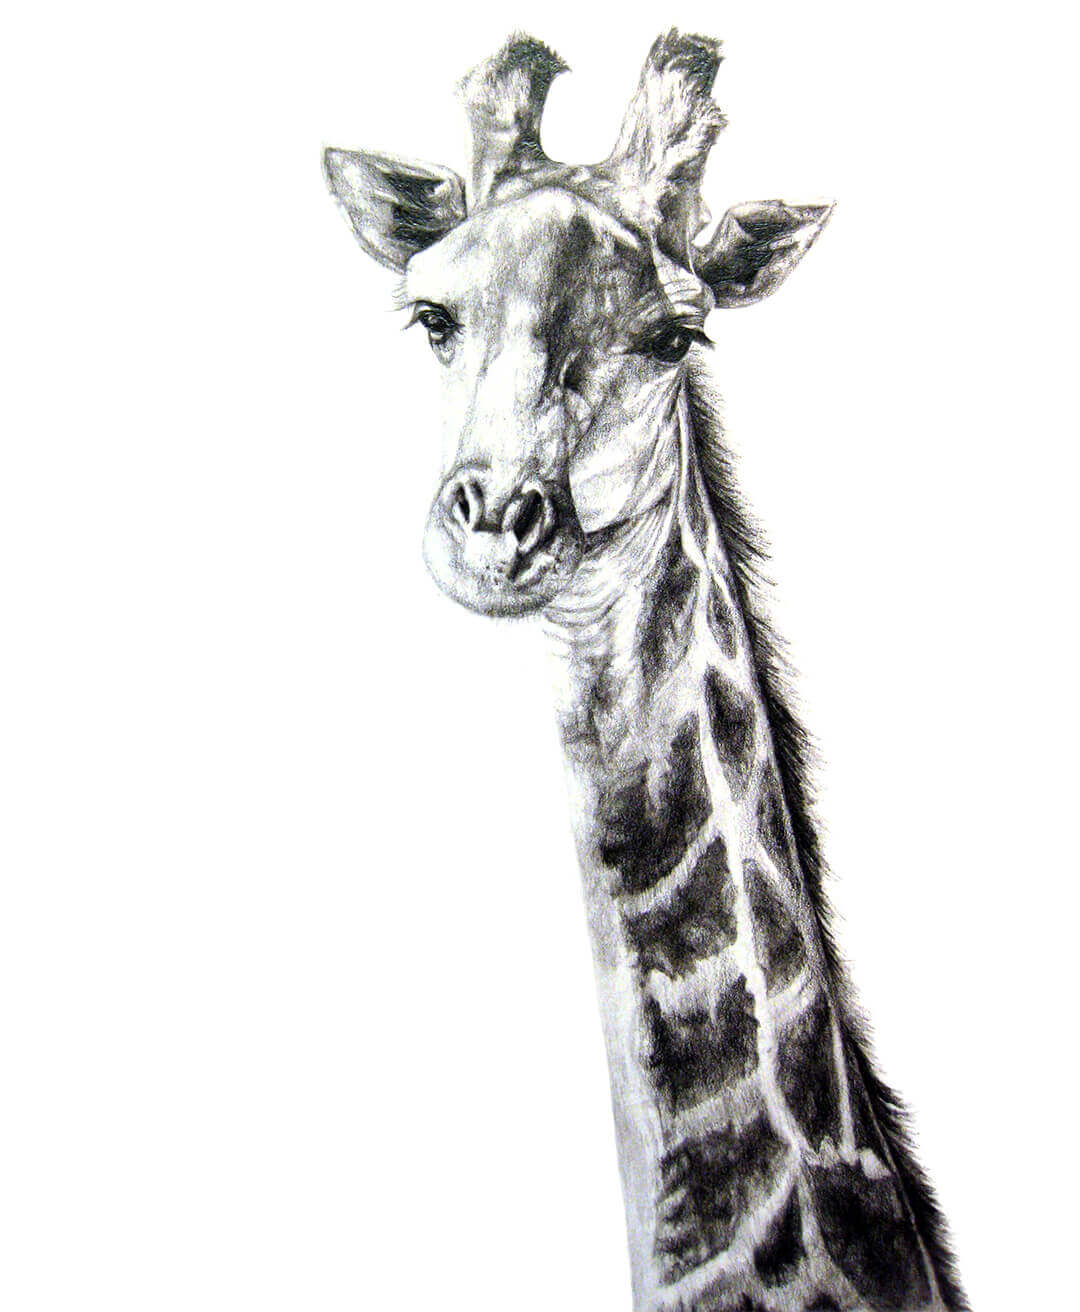 Southern Giraffe pencil drawing by Malcolm Bowling